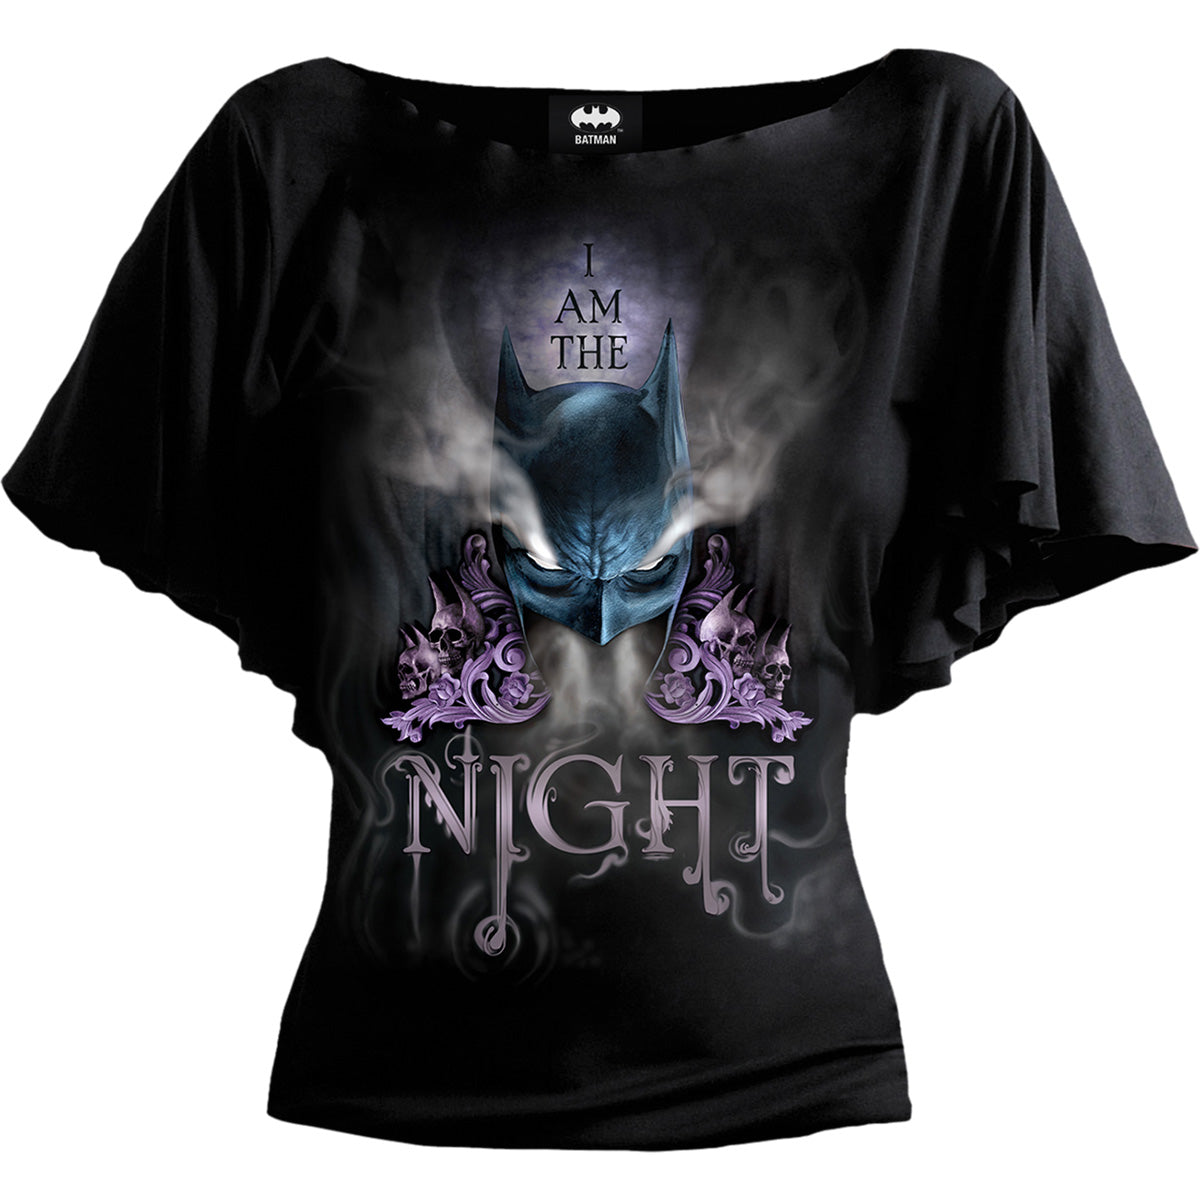 BATMAN - I AM THE NIGHT - Boat Neck Bat Sleeve Top Black